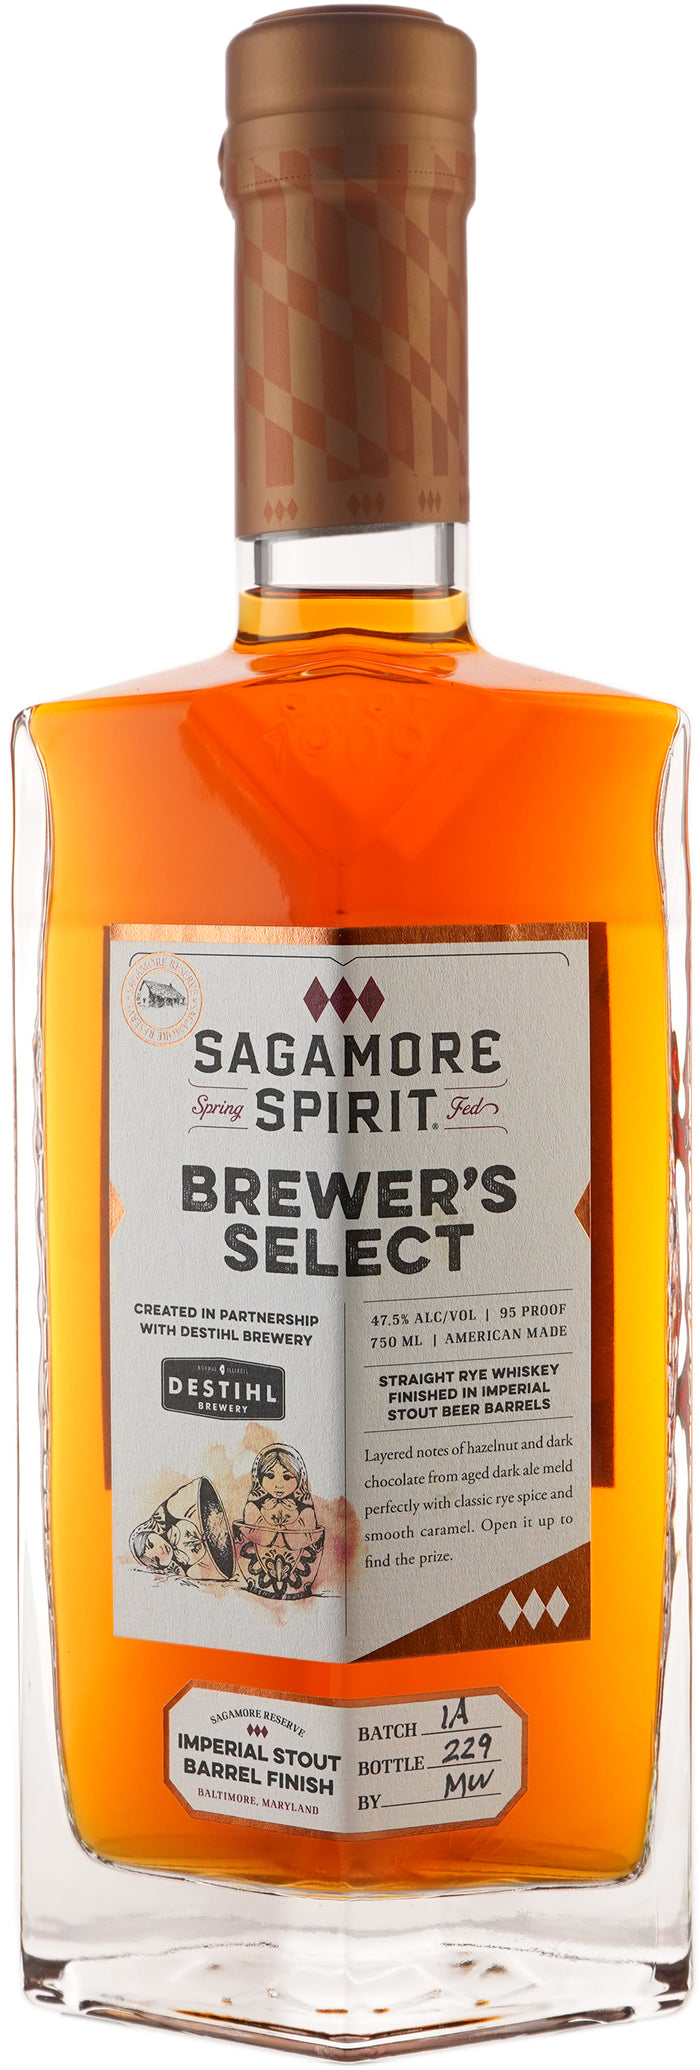 Sagamore Spirit Brewer's Select Imperial Stout Barrel Finish Rye Whiskey